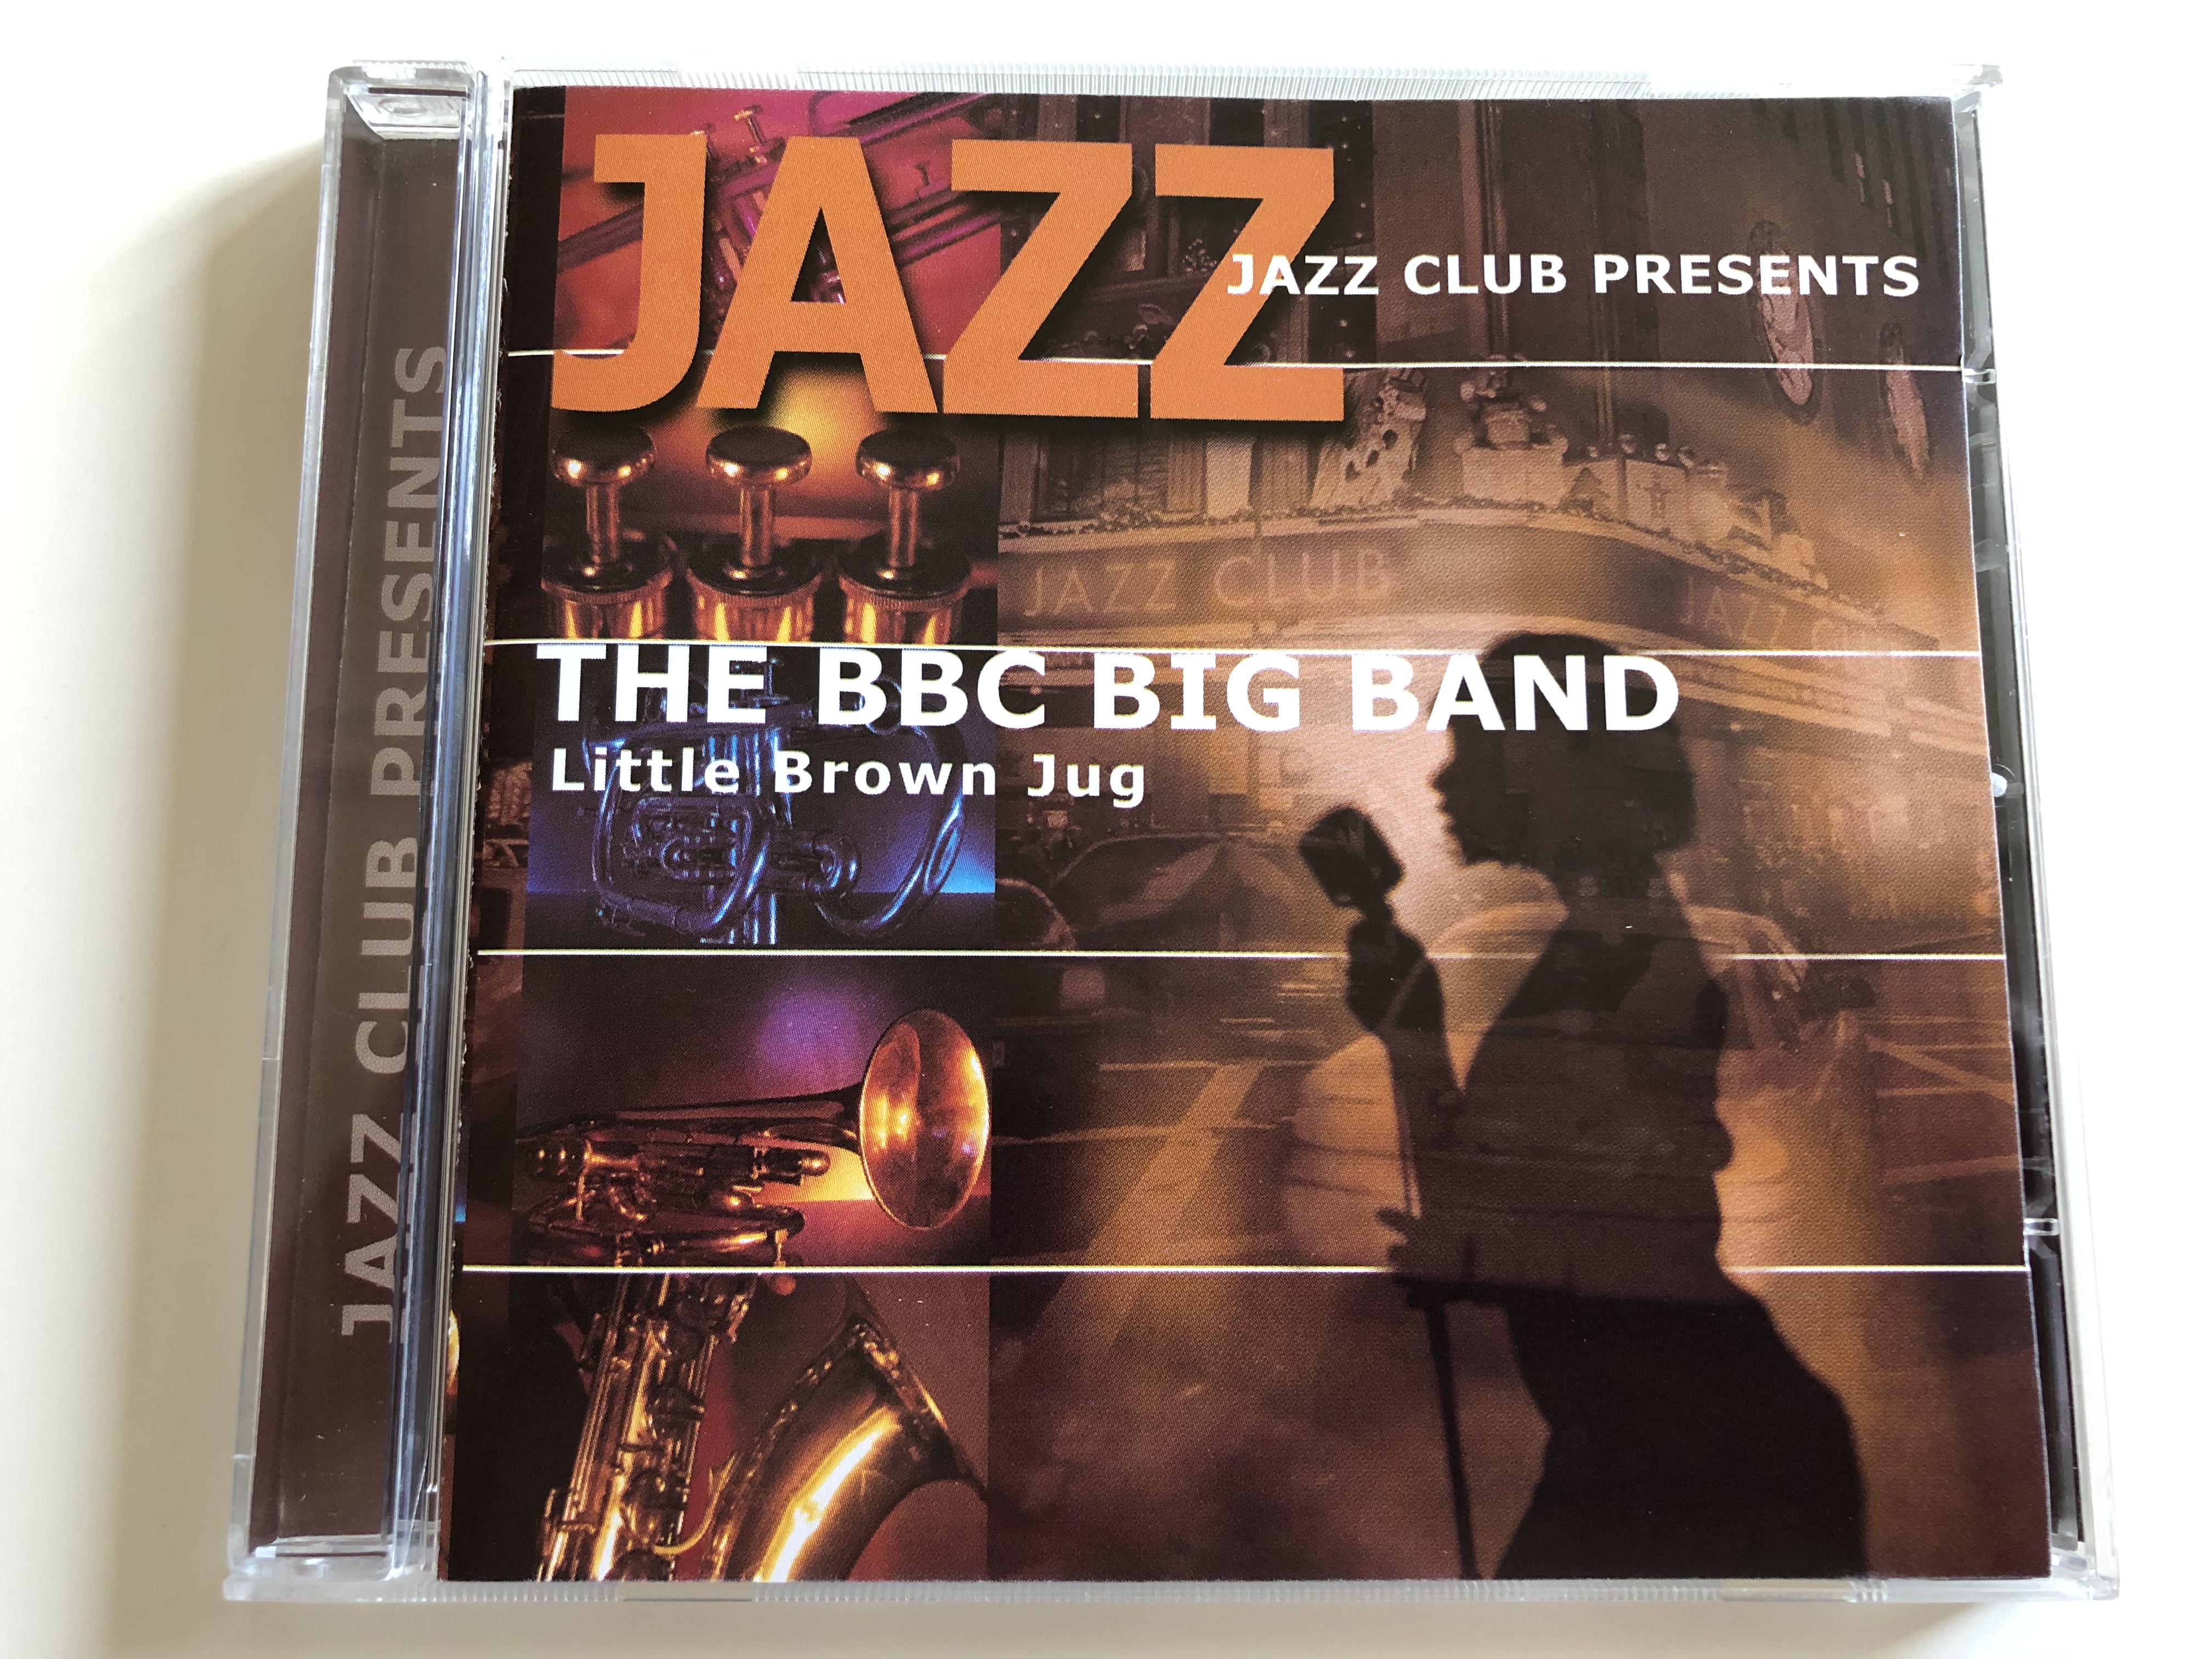 jazz-club-presents-the-bbc-big-band-little-brown-jug-galaxy-music-audio-cd-2001-3899902-1-.jpg